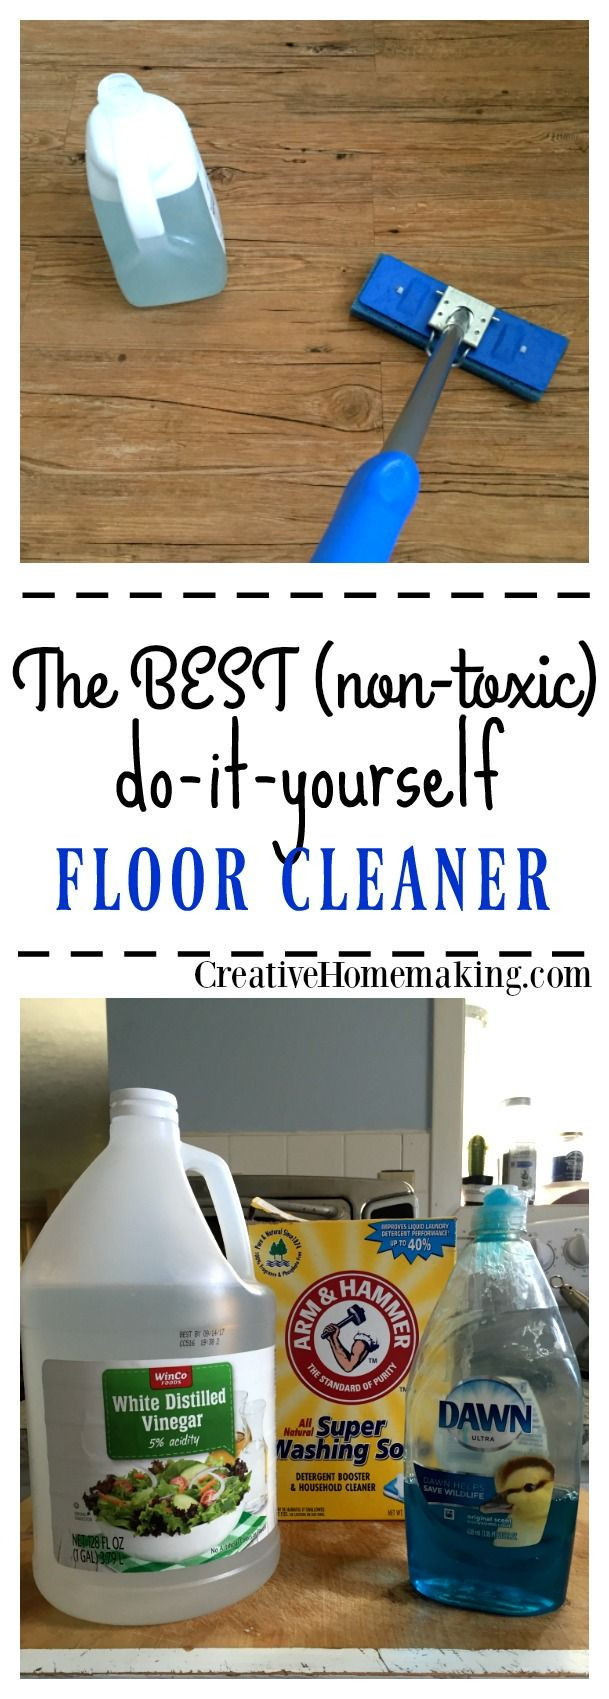 Best ideas about DIY Laminate Floor Cleaner
. Save or Pin 25 best ideas about Homemade Floor Cleaners on Pinterest Now.